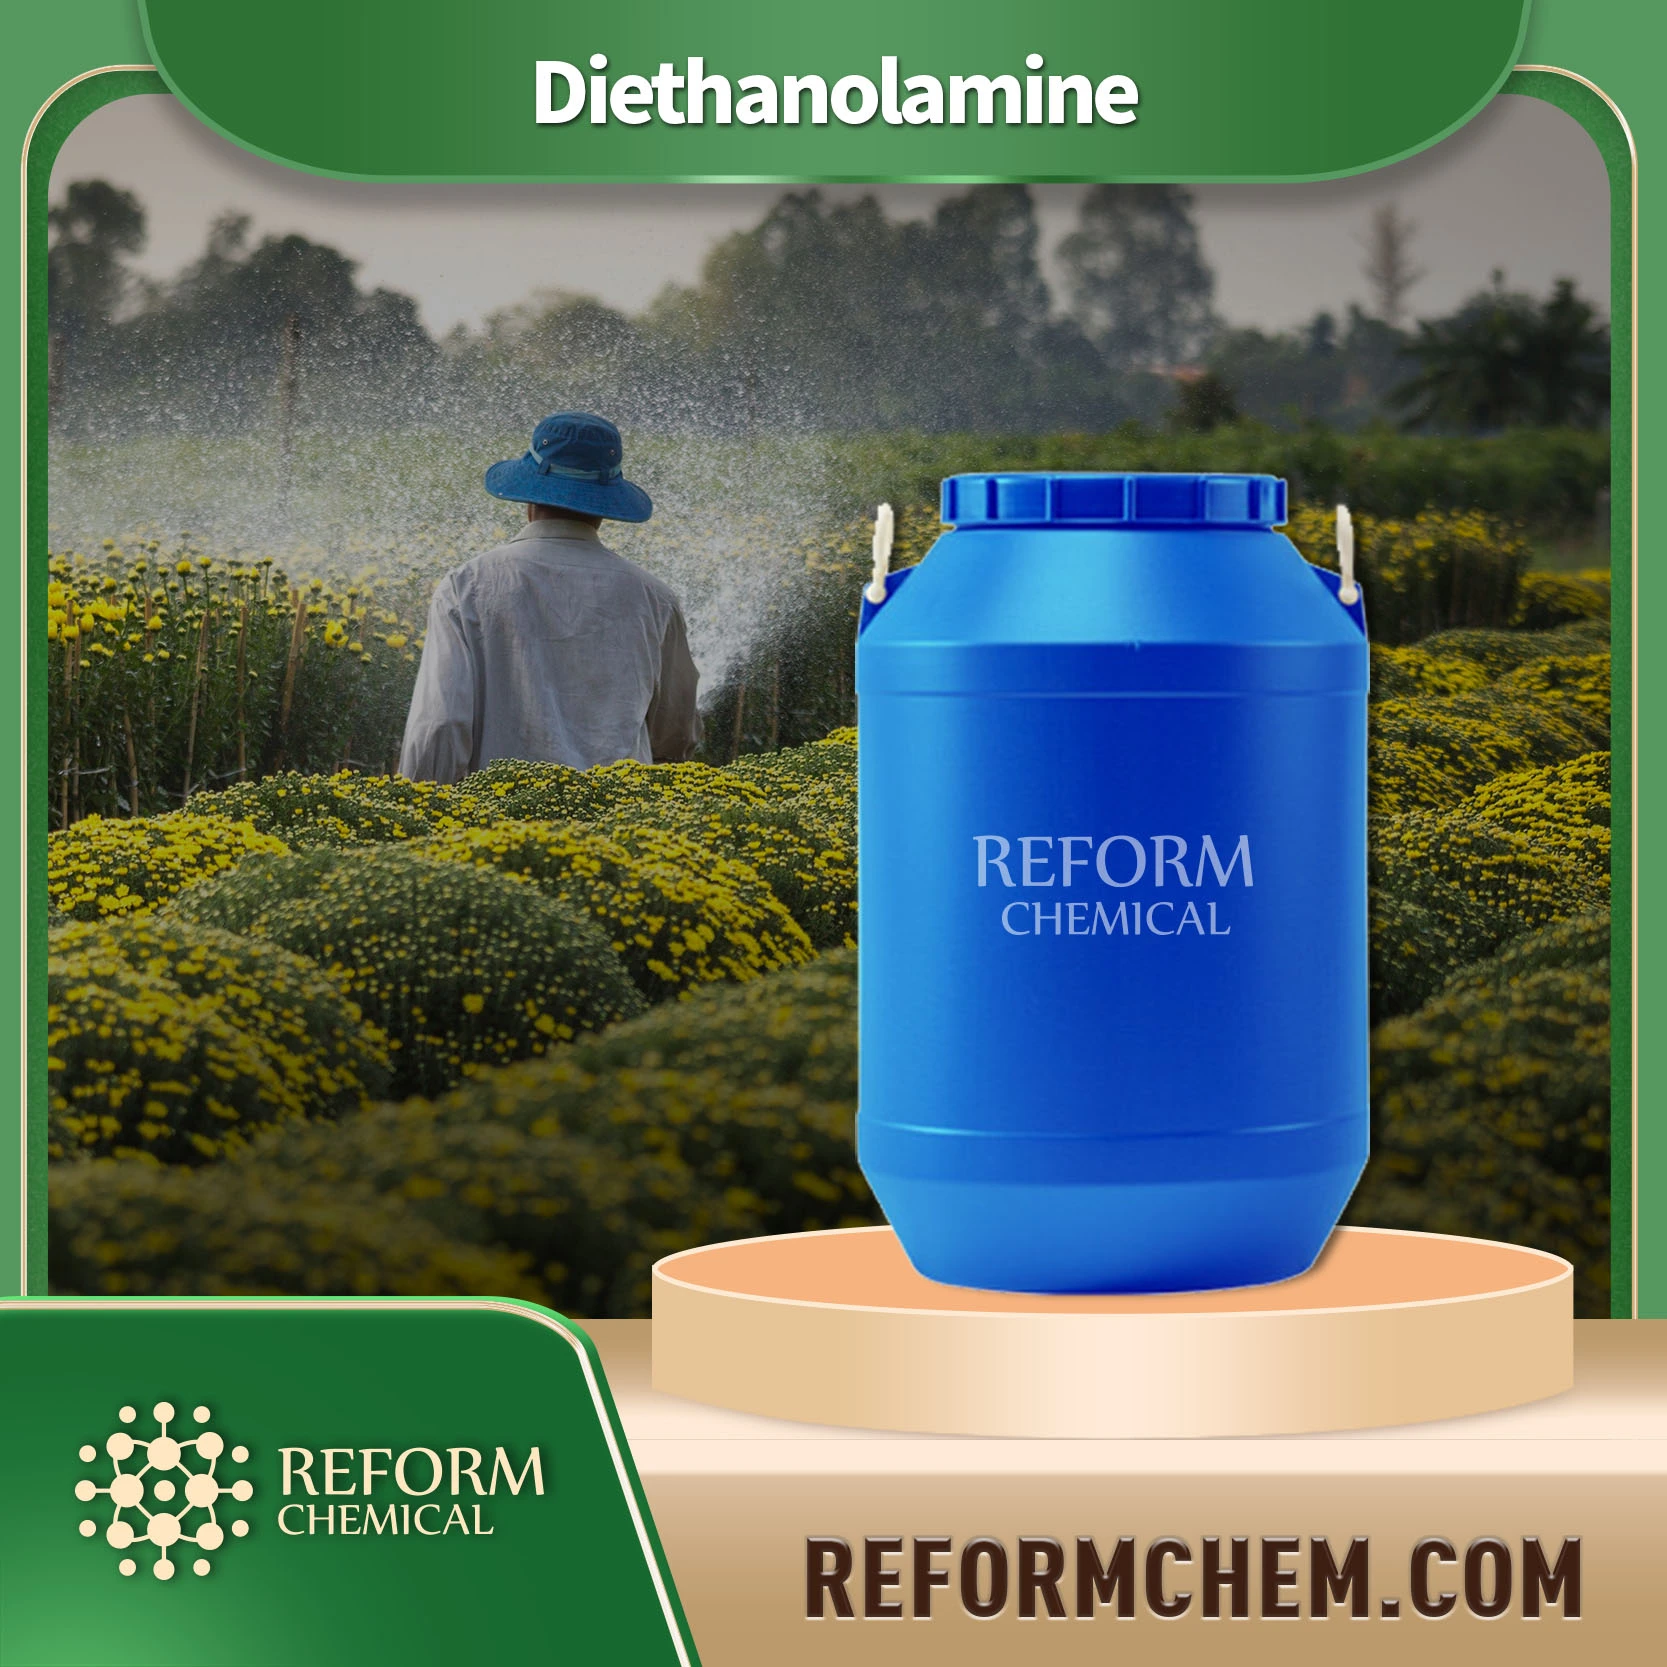 diethanolamine111 42 2